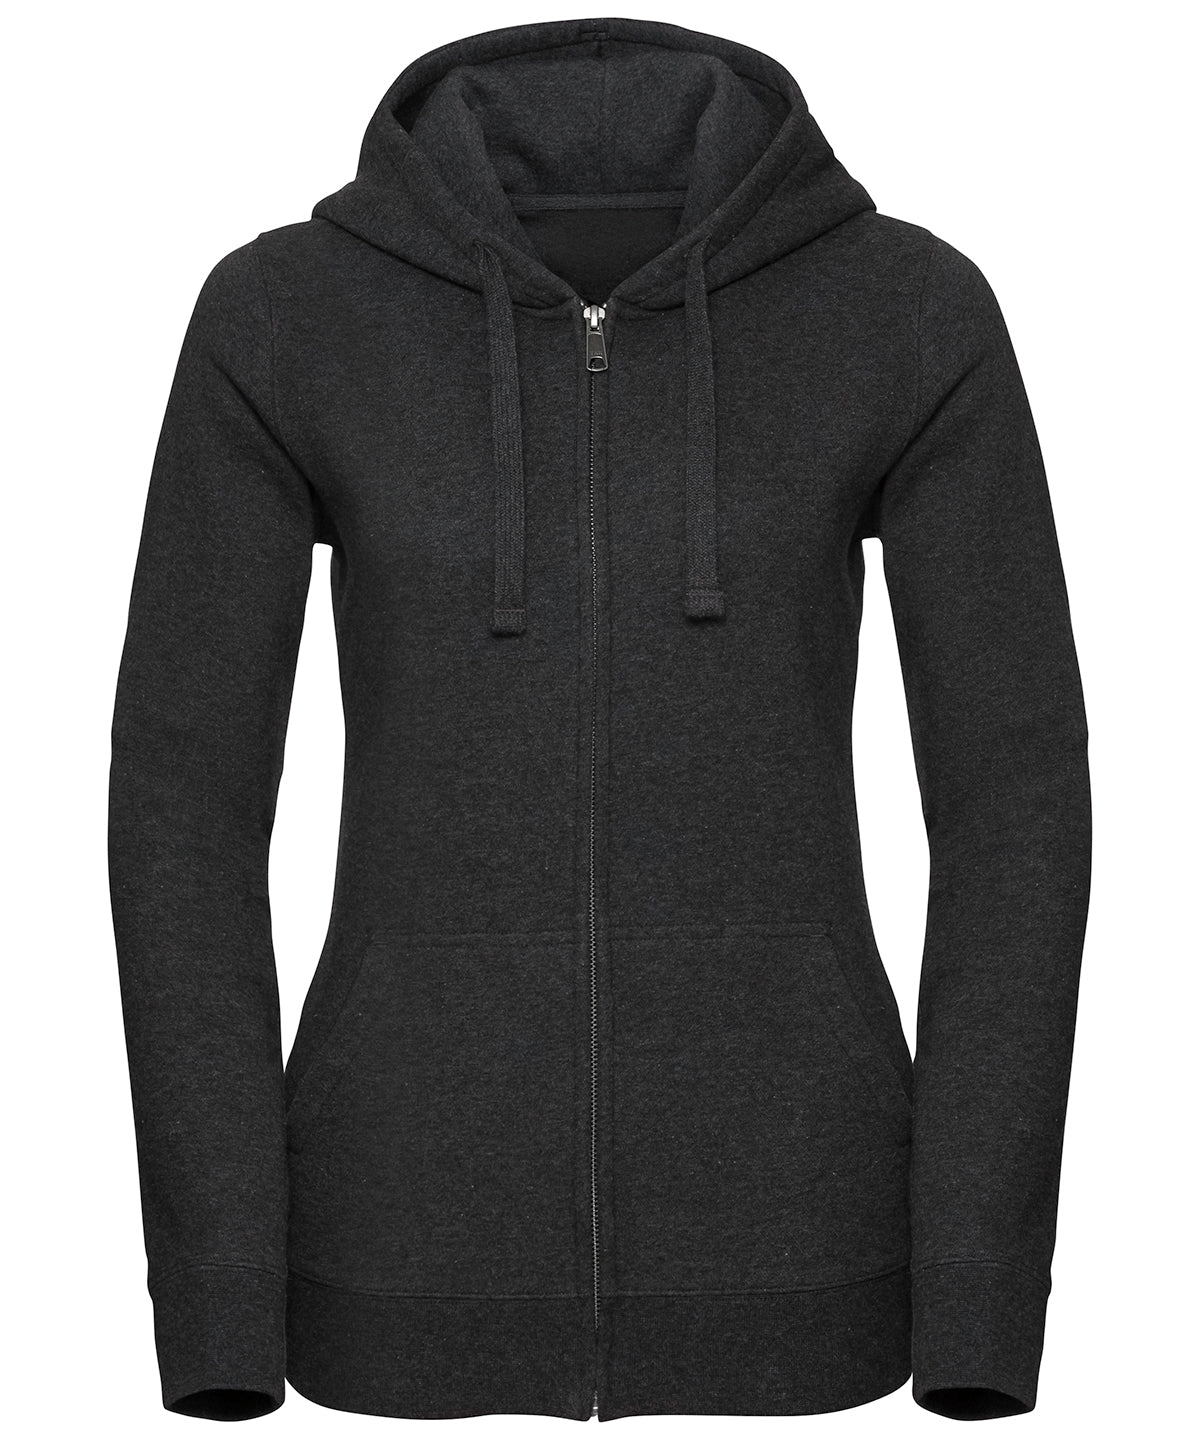 Hettupeysur - Women's Authentic Melange Zipped Hood Sweatshirt